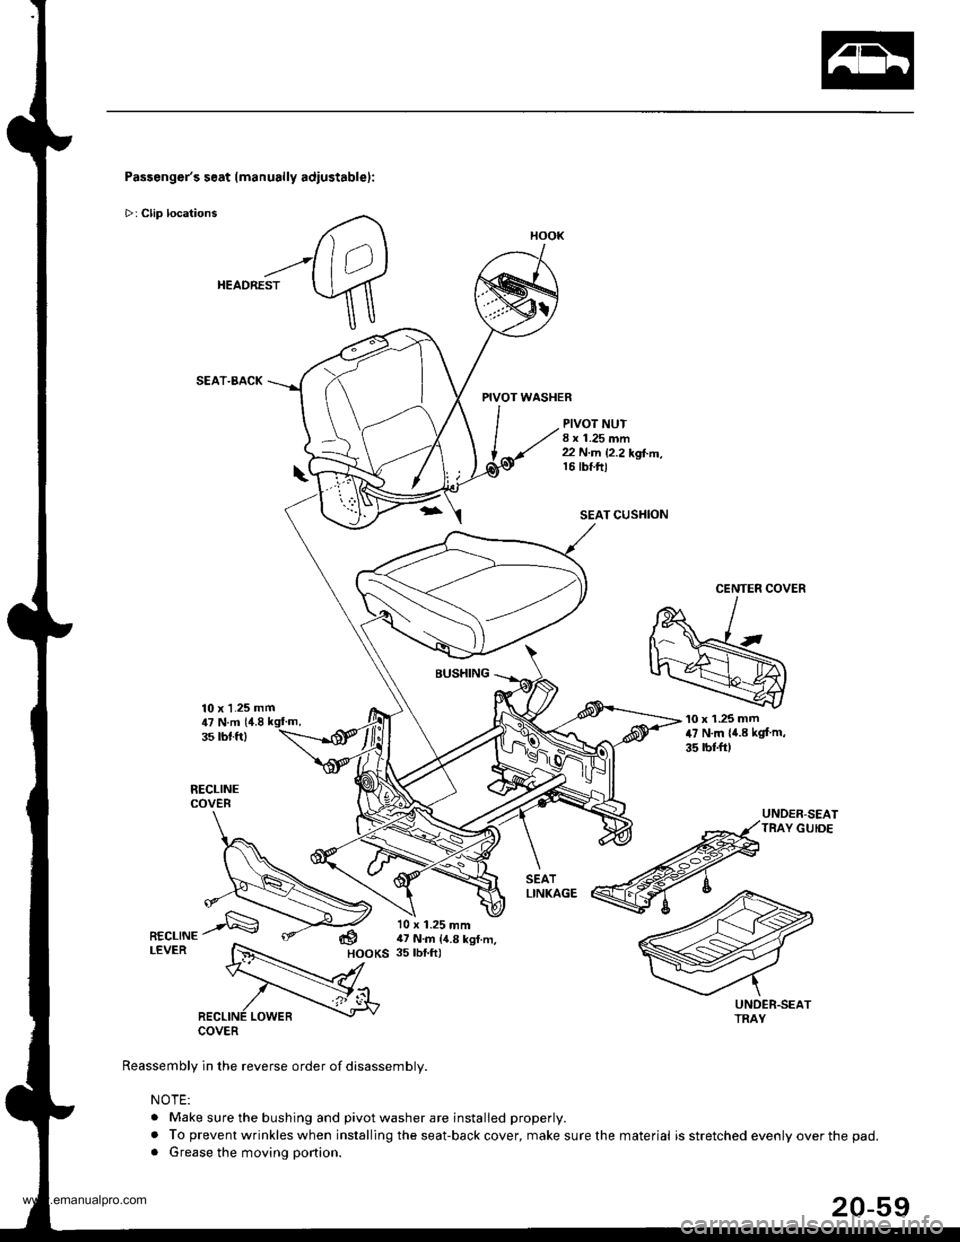 HONDA CR-V 1999 RD1-RD3 / 1.G Workshop Manual 
Passengers seat (manually adiustablel:
>: Clip locations
HEADREST
SEAT.BACK
10 x 1.25 mm
PIVOT WASHER
PIVOT NUT8 x 1.25 mm22 N.m 12.2 kgl..n,16 tbt.ftl
SEAT CUSHION
CENTER COVER
BUSHING
COVER
Reasse